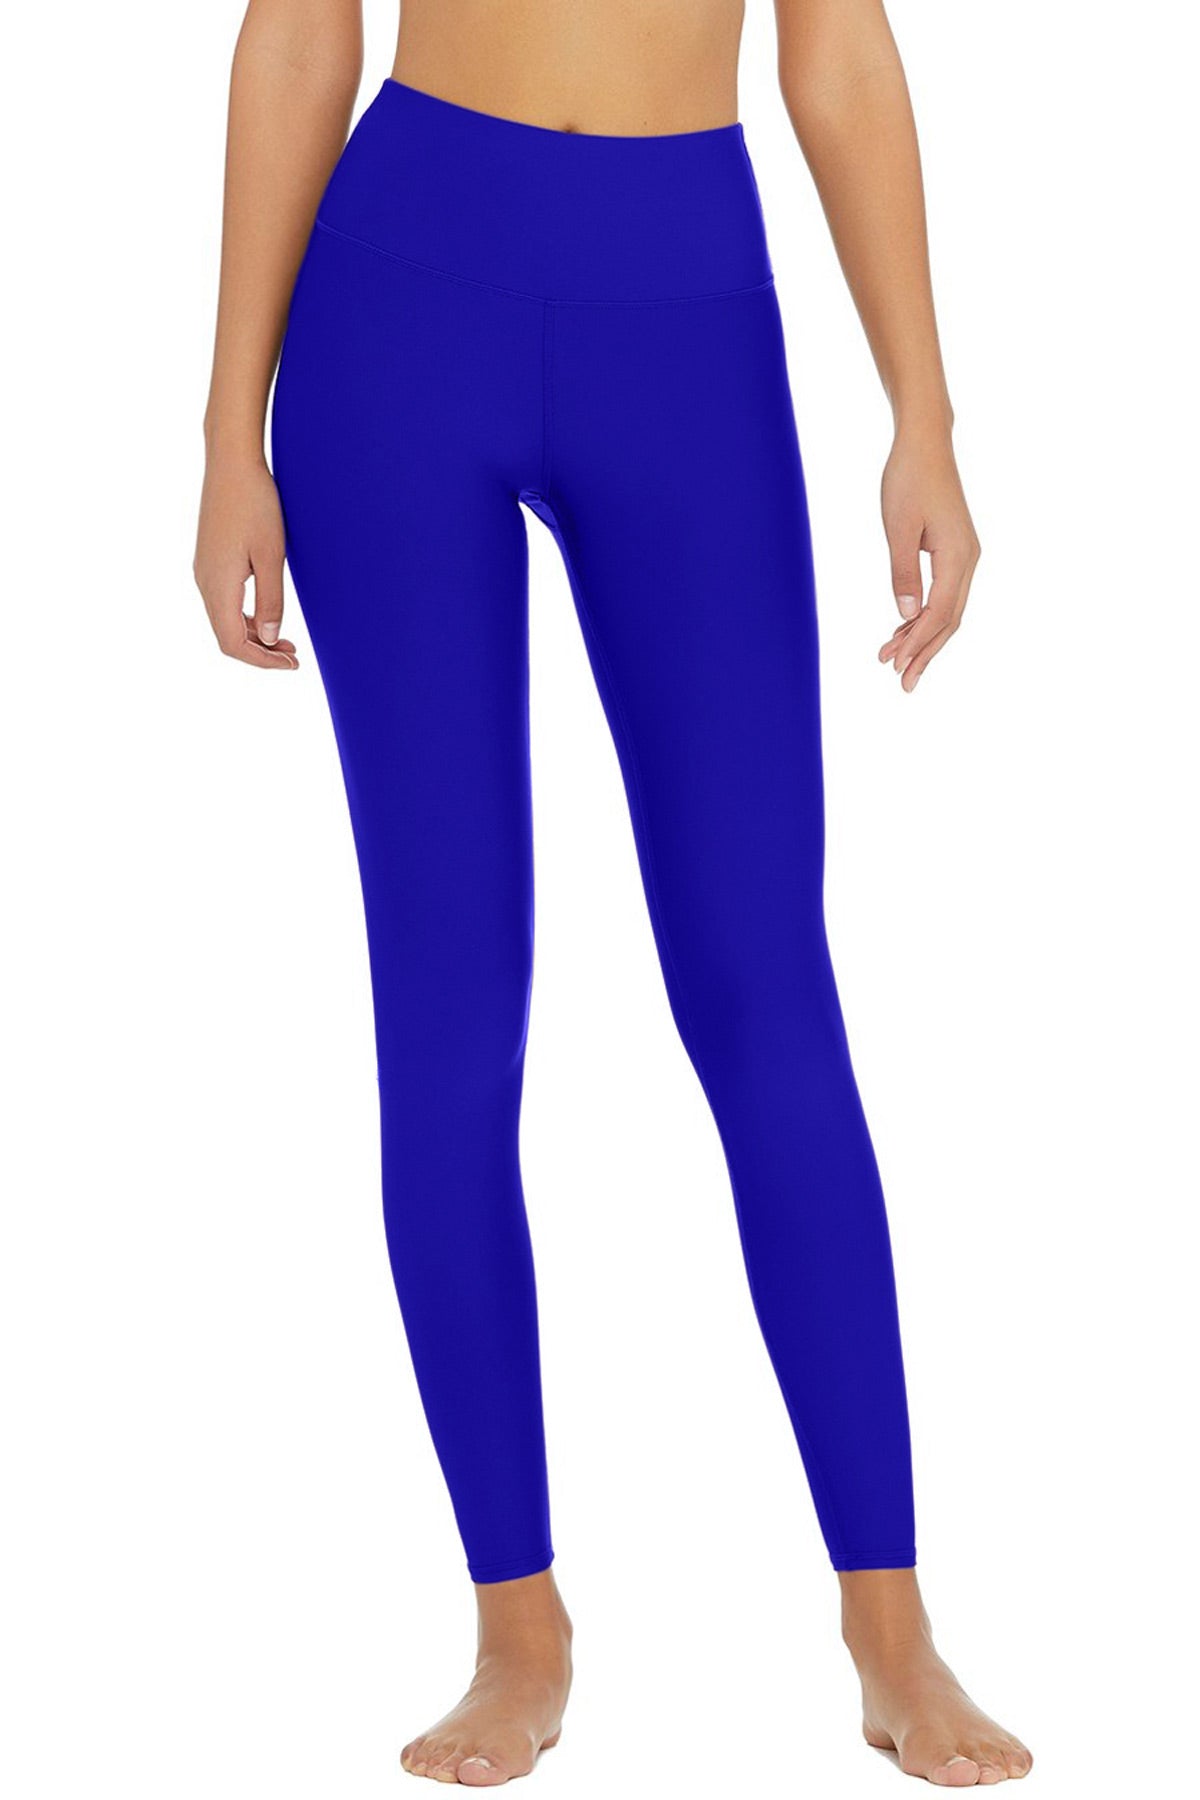 Royal Blue UV 50+ Lucy Vivid Performance Leggings Yoga Pants - Women, Pineapple Clothing